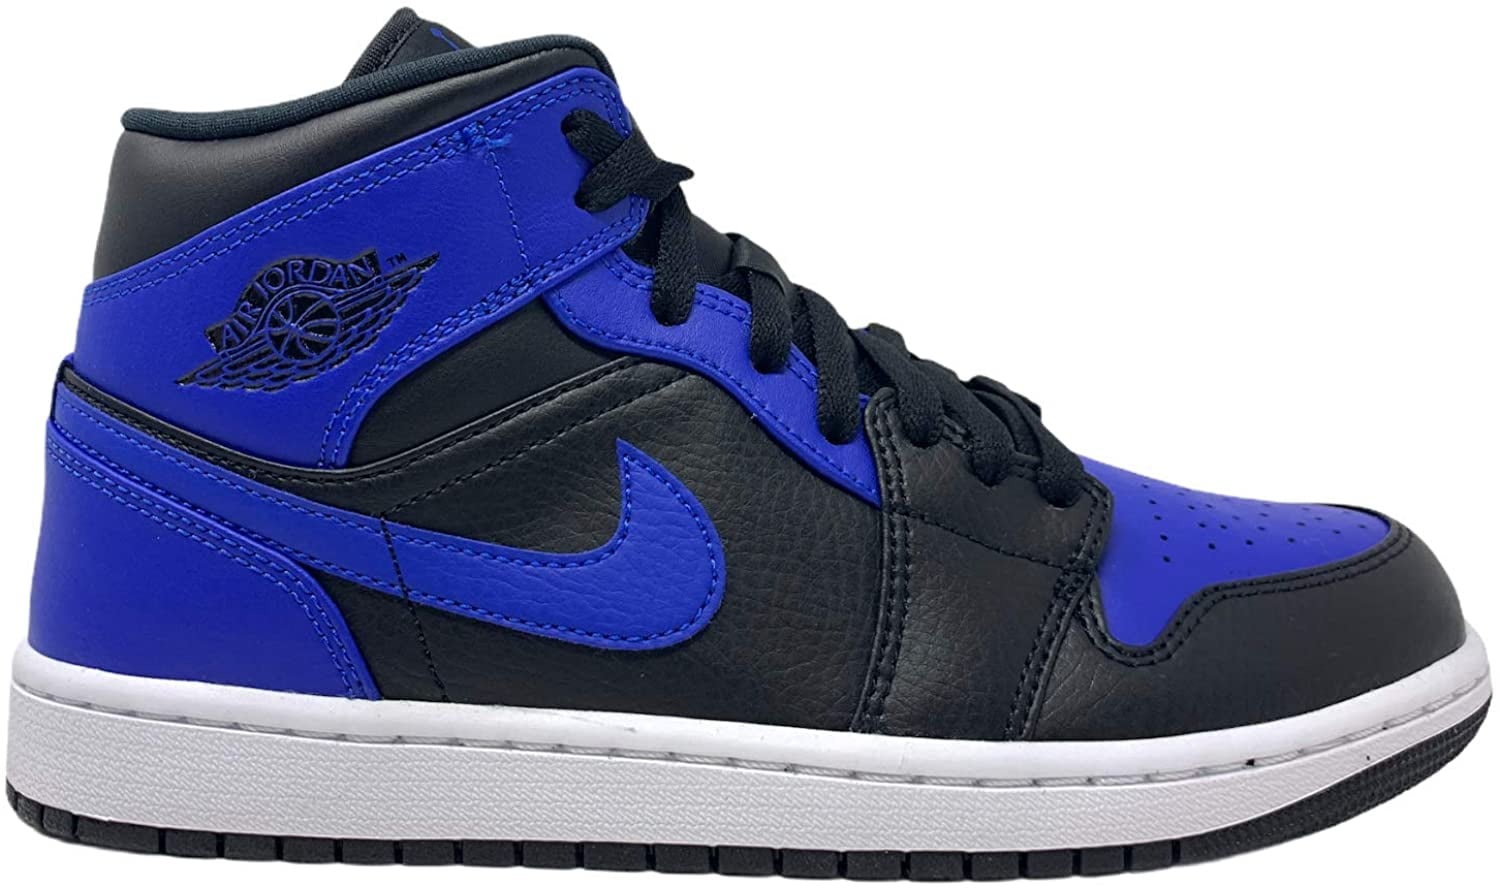 Buy Nike Jordan 1 Mid Royal Mens Blue and Black 554724-077 Online at